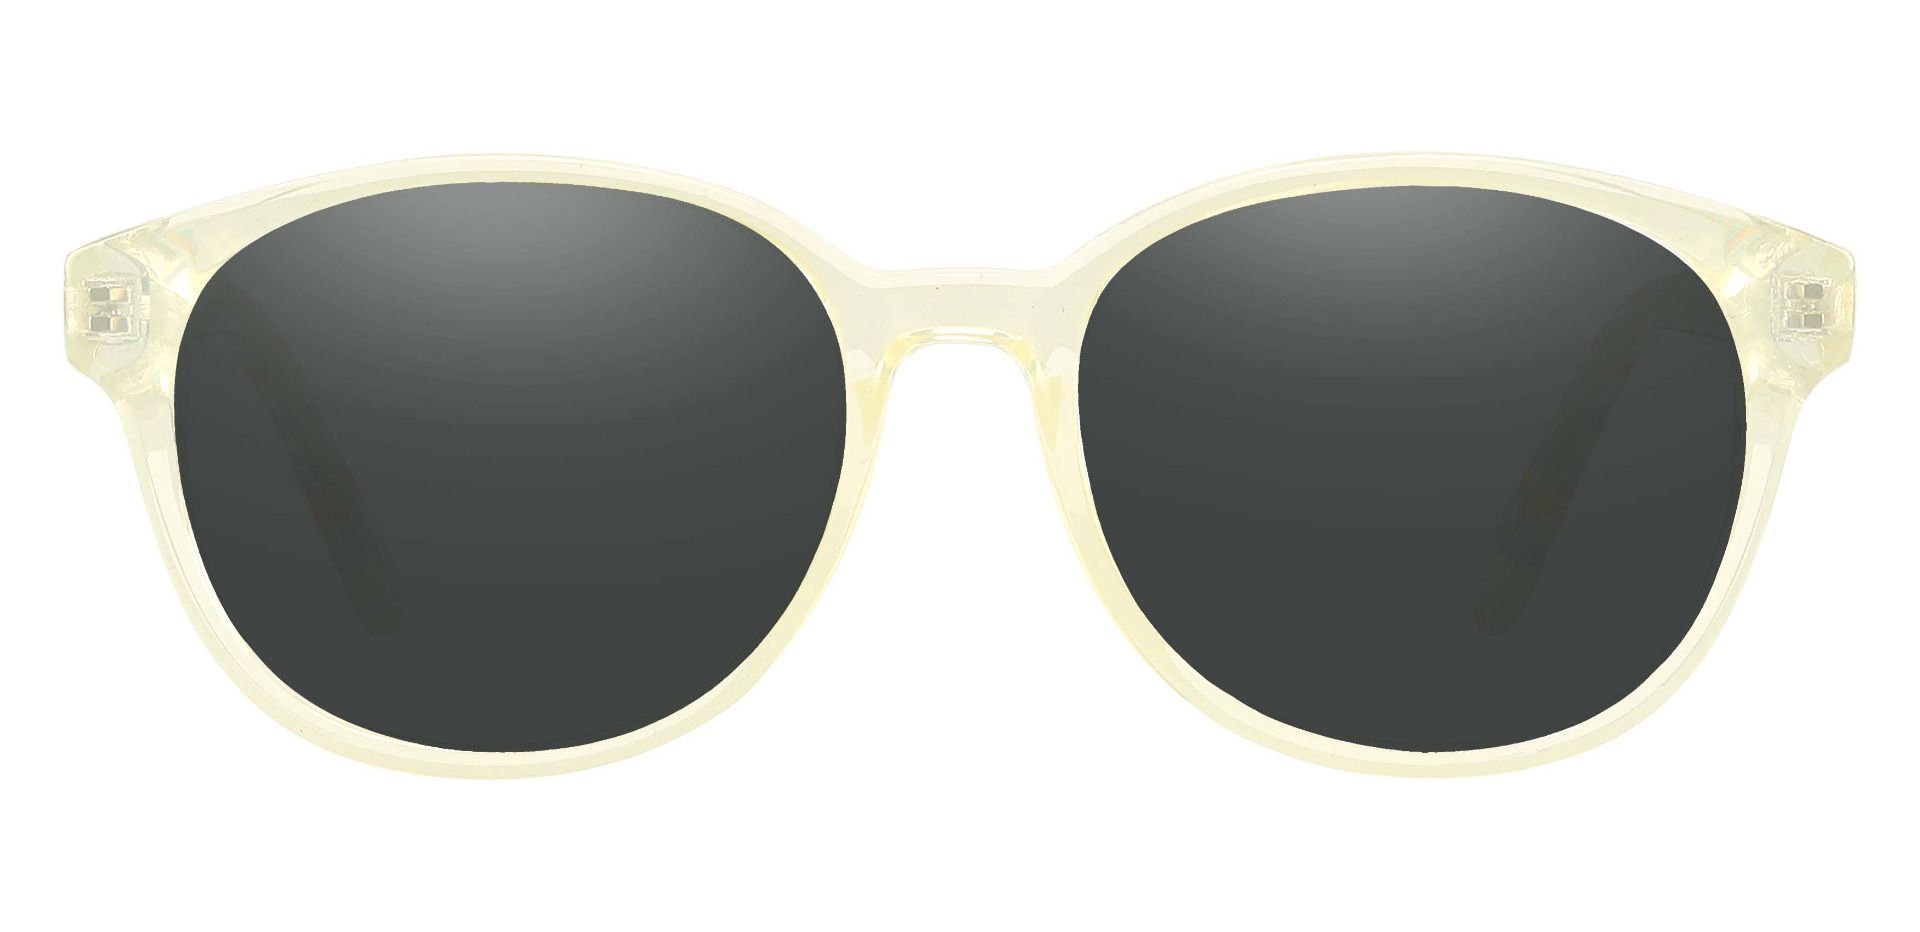 Allegra Oval Prescription Sunglasses - Green Frame With Gray Lenses